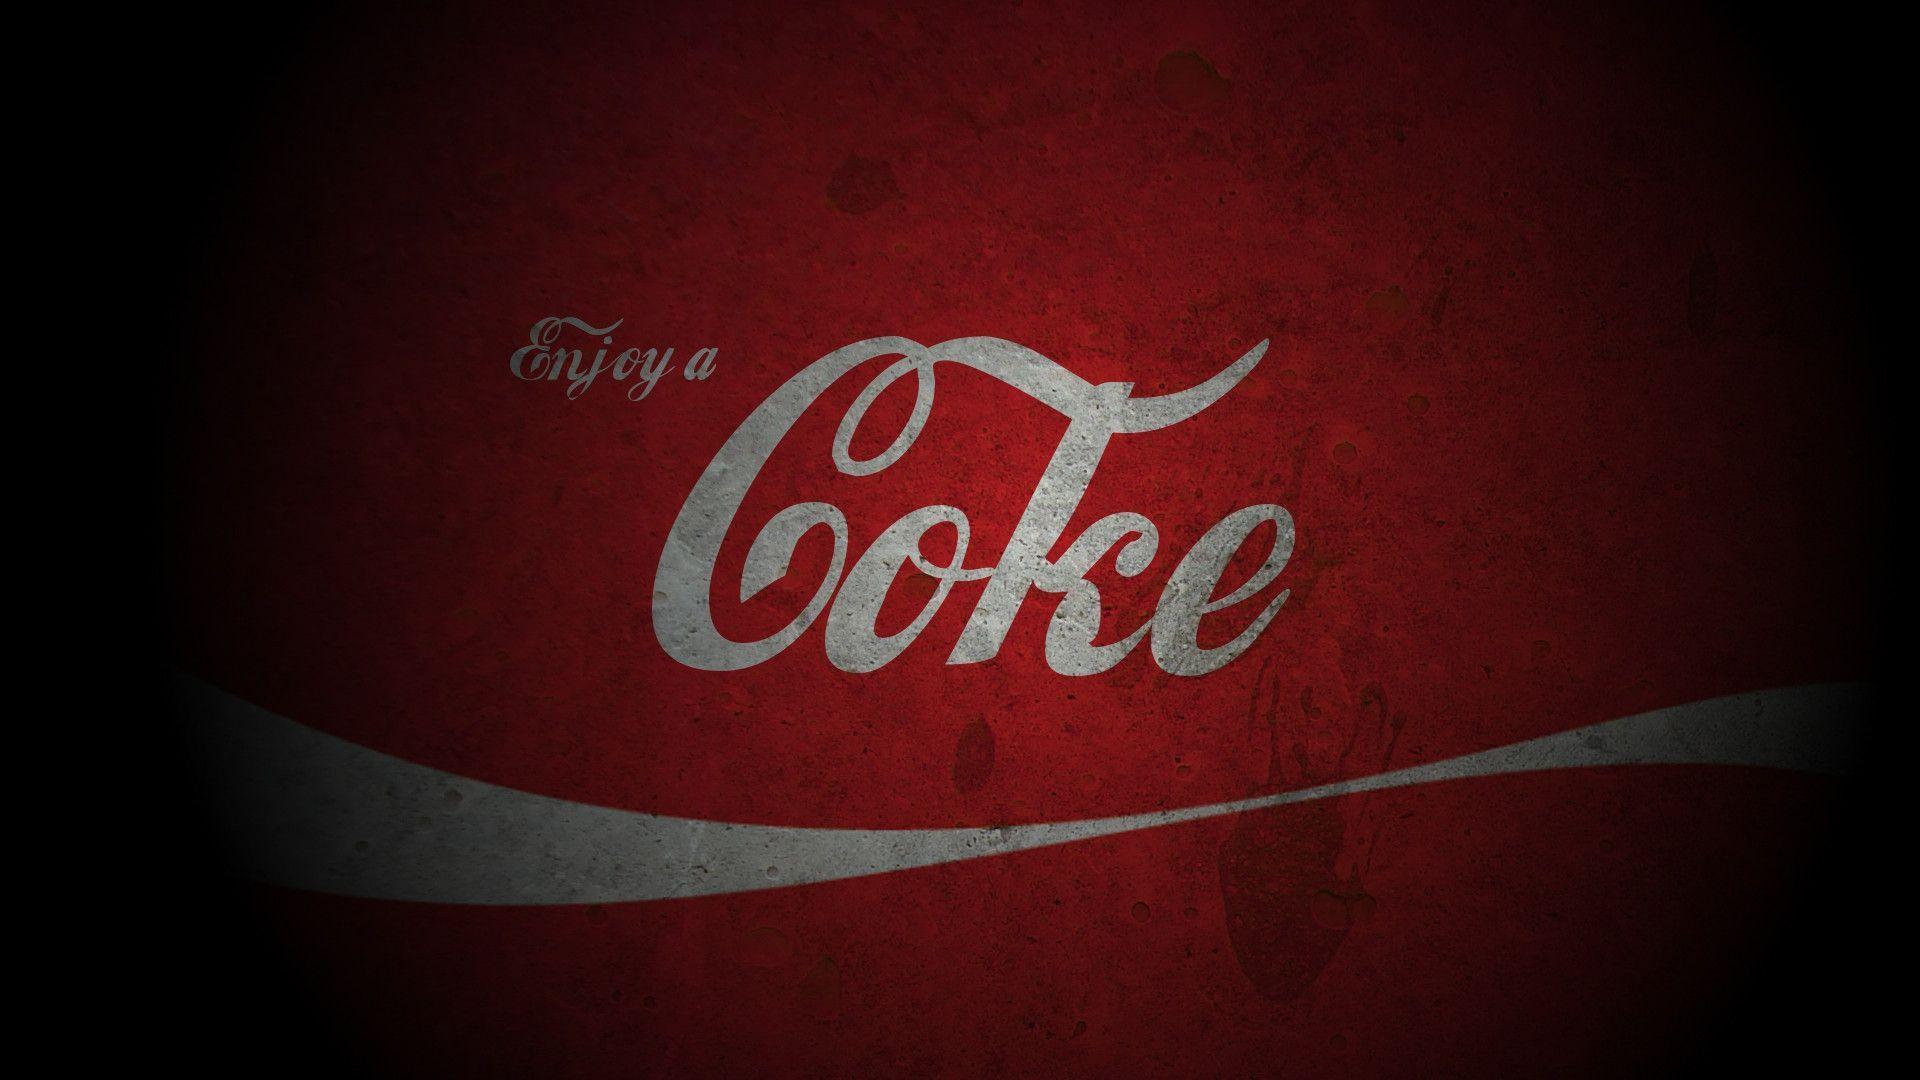 Hd Just Coke Image Wallpaper